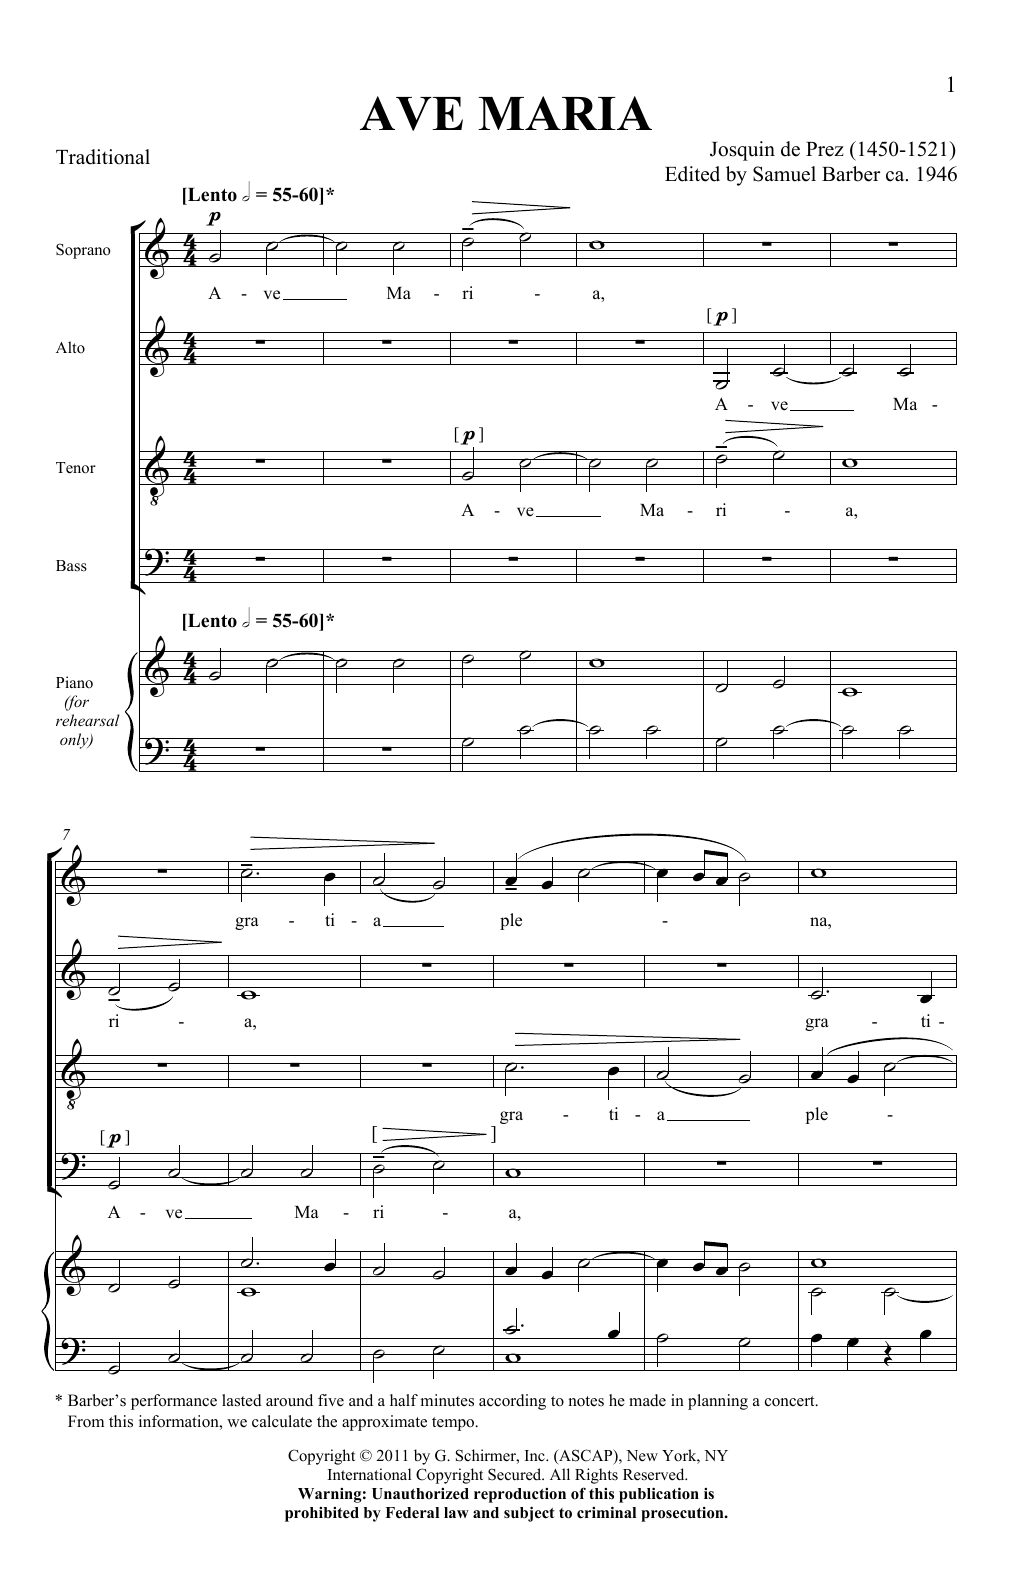 Josquin de Prez Ave Maria (ed. Samuel Barber) sheet music notes and chords arranged for SATB Choir